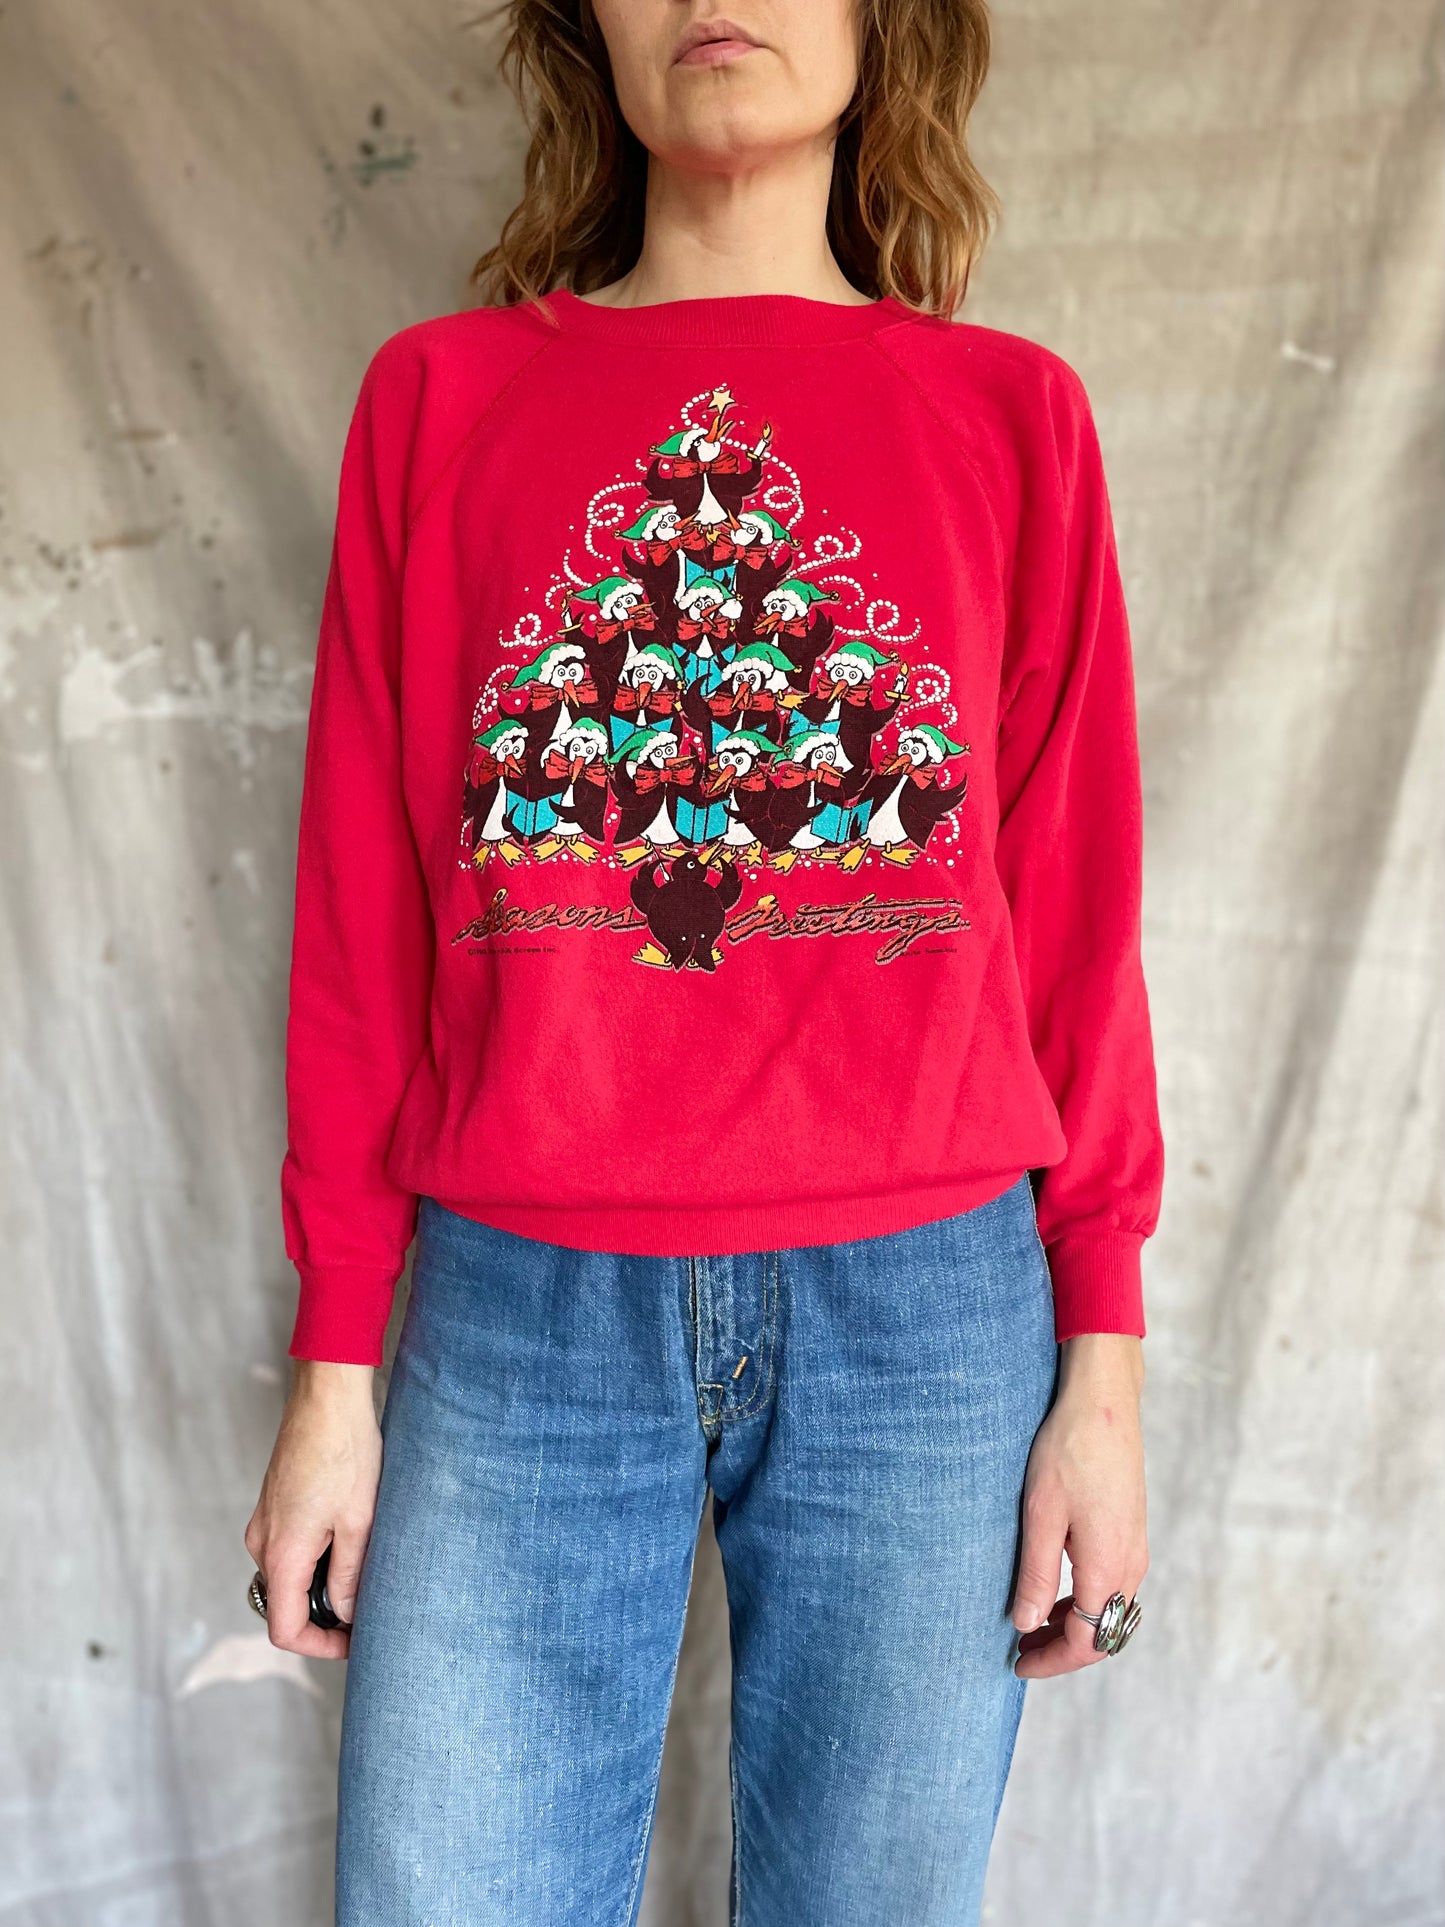 90s Seasons Greetings Holiday Sweatshirt